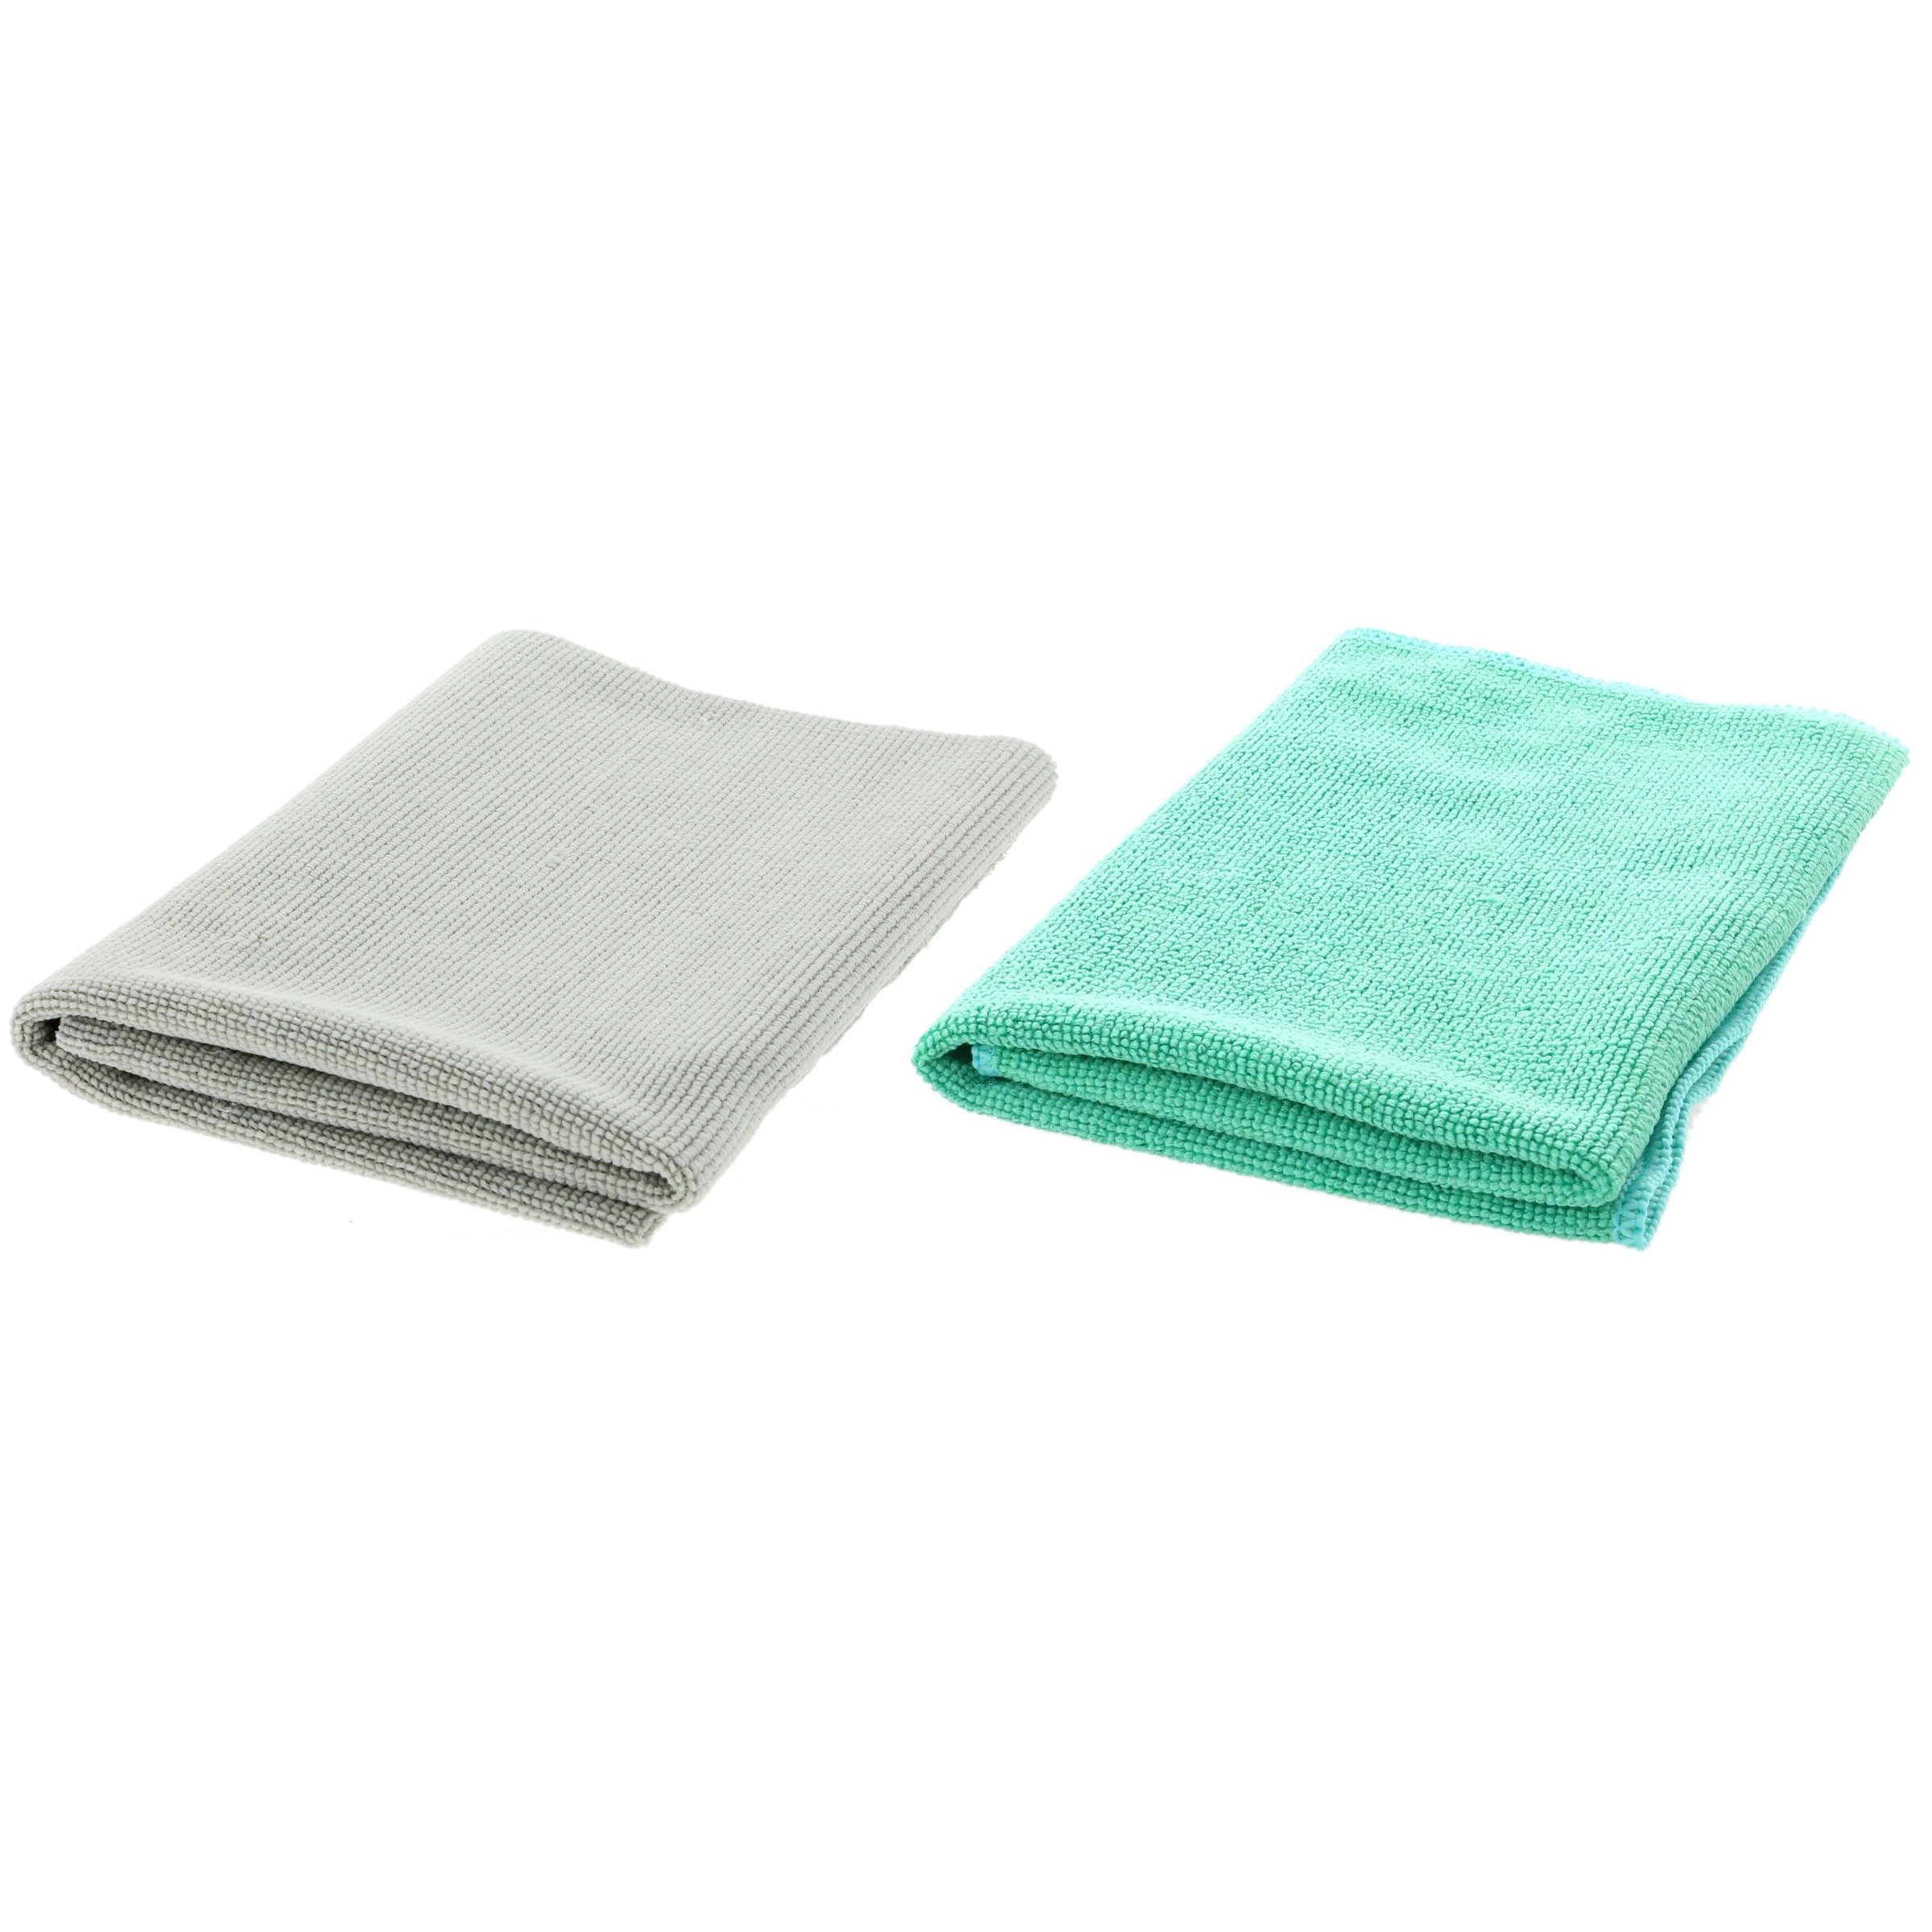 The Edgeless Pearl Ceramic Coating Towel